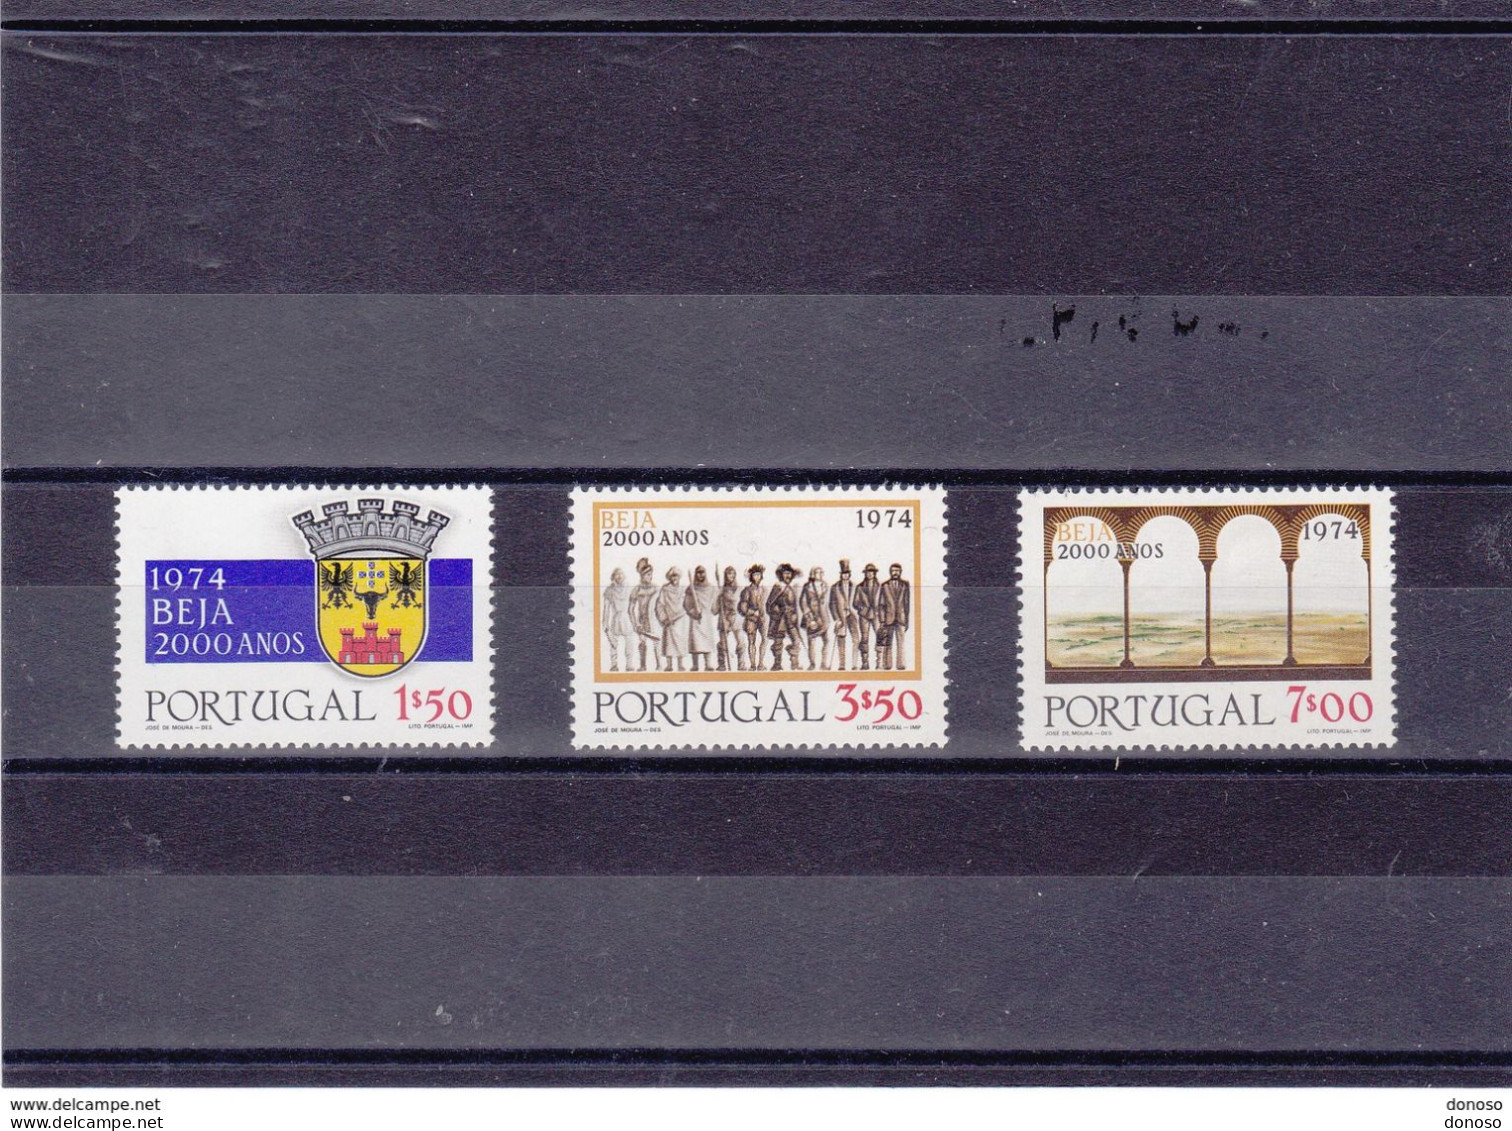 PORTUGAL 1974 VILLE DE BEJA Yvert 1240-1242, Michel 1260-1262 NEUF** MNH Cote 6,50 Euros - Neufs